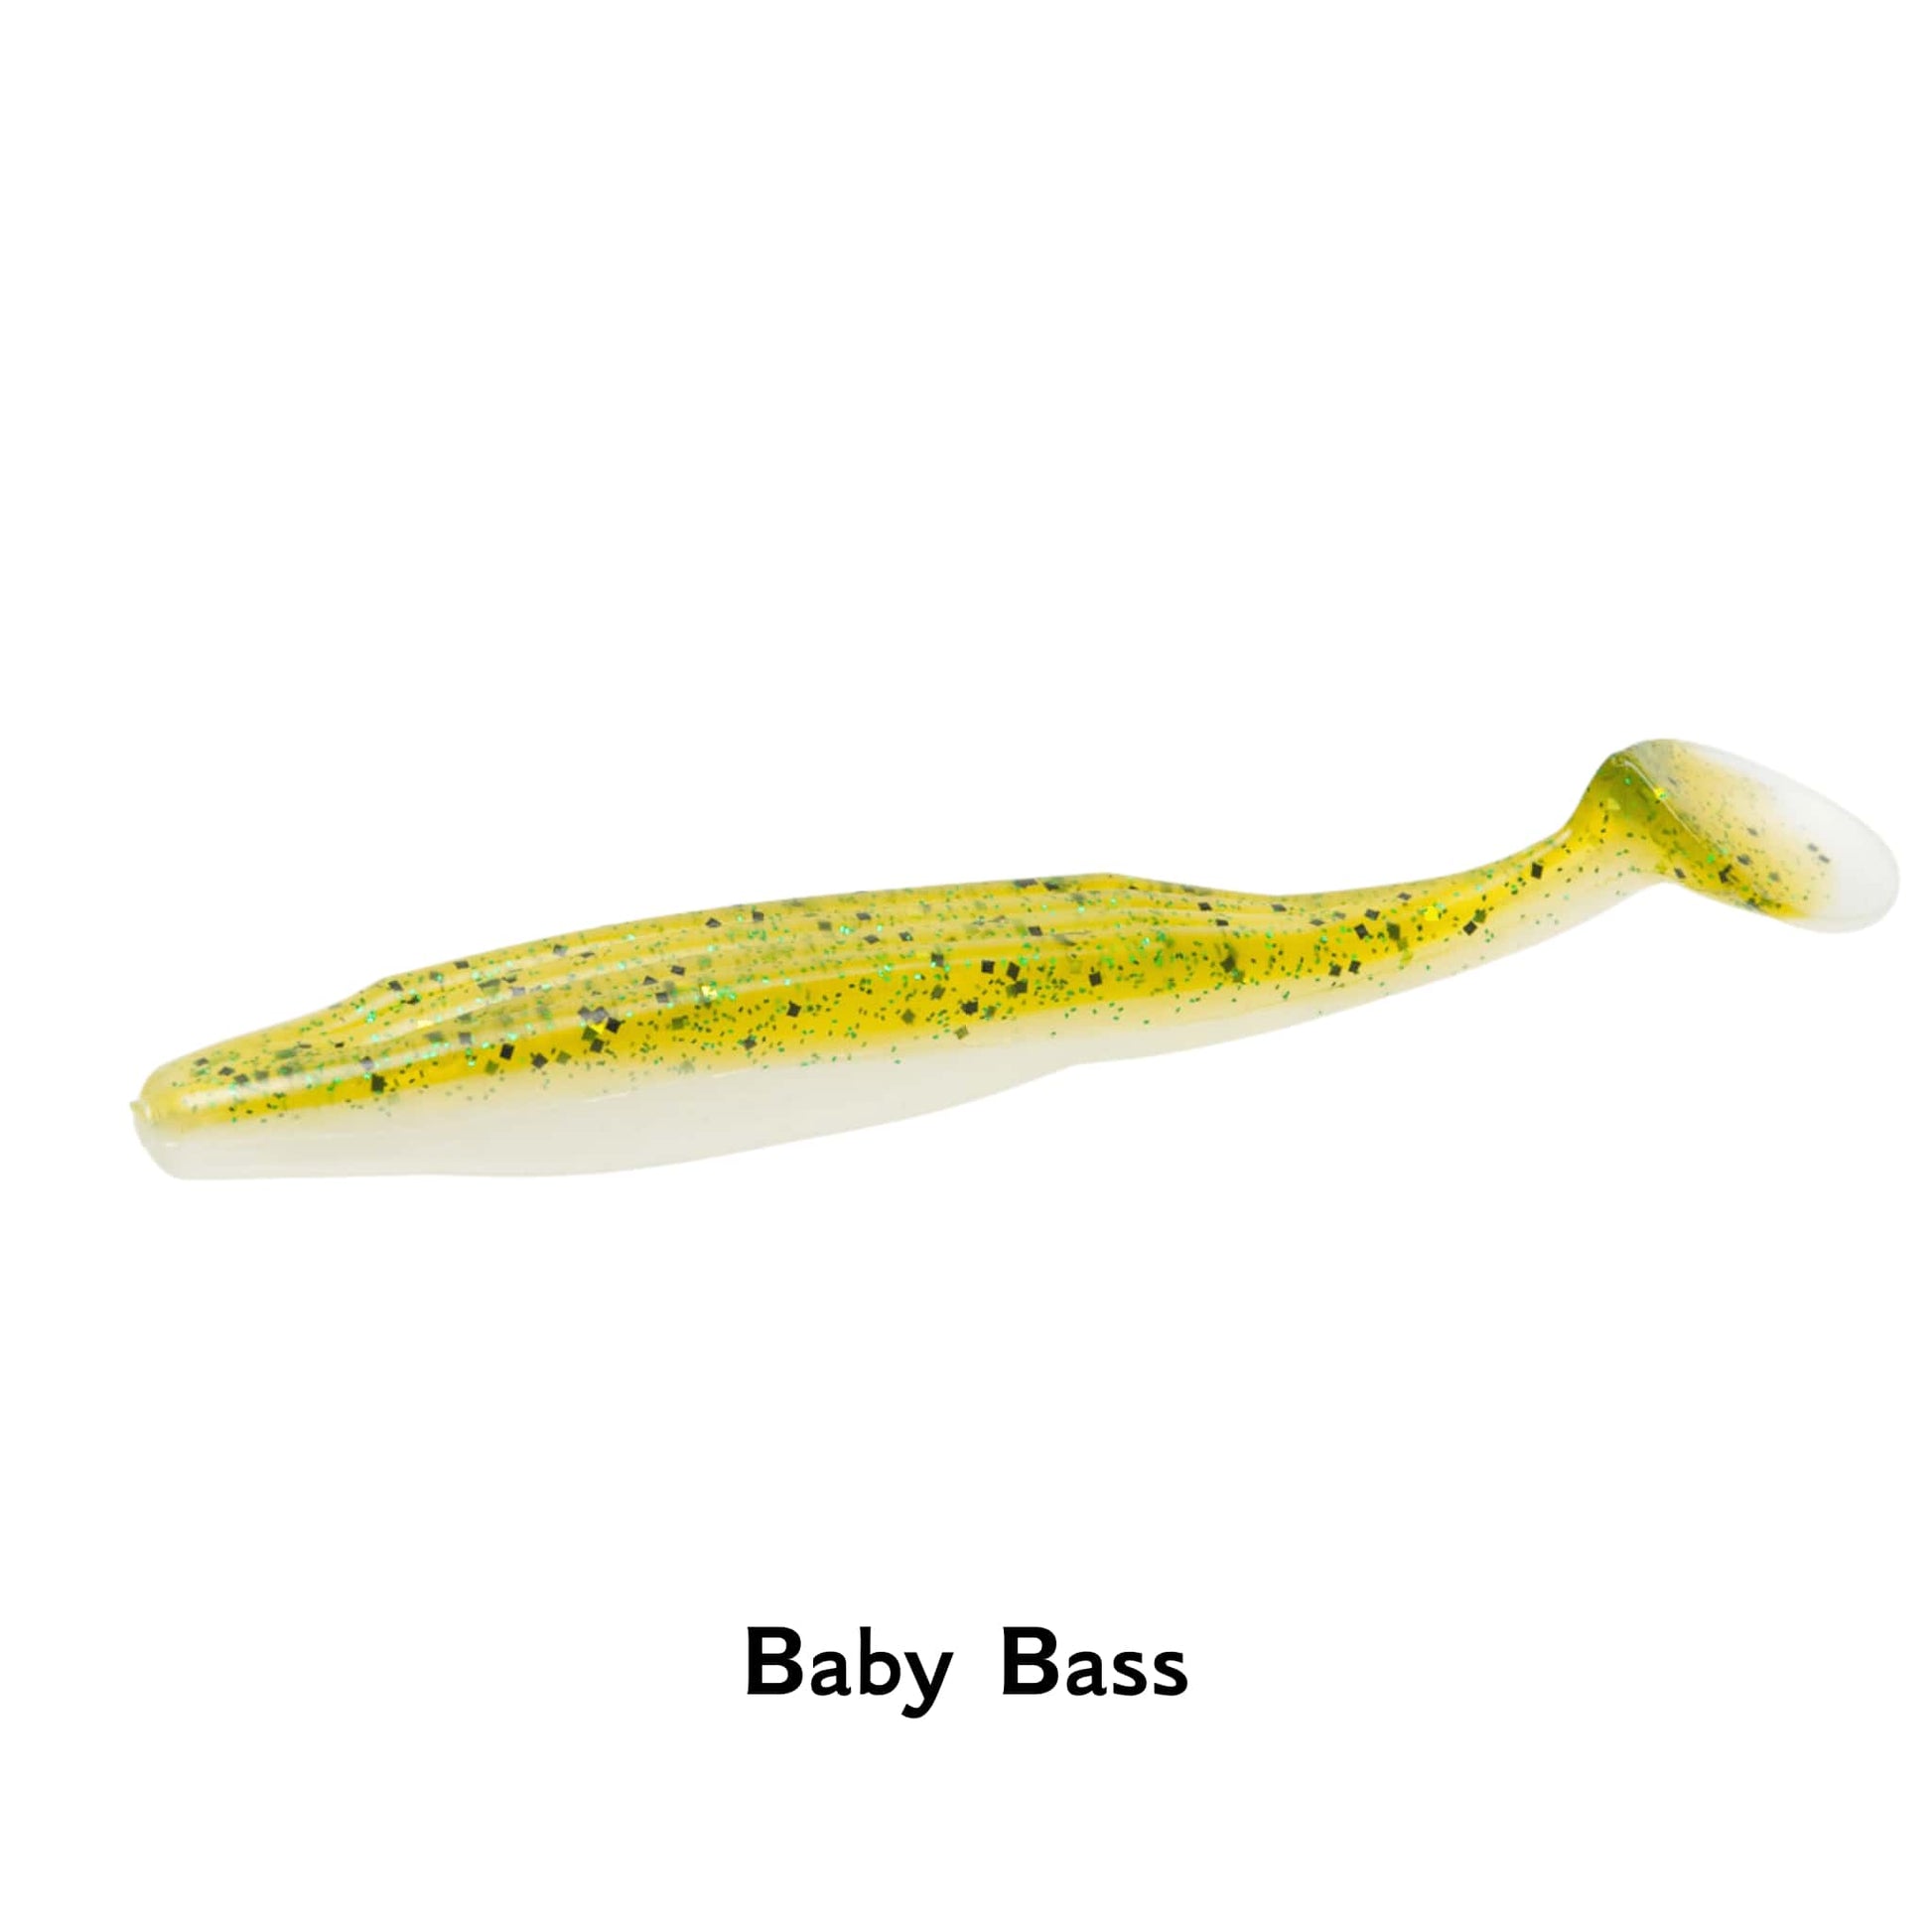 Zoom Swimmin Super Fluke Baby Bass 4 Inch 5pcs Soft Bait Fishing Lure ALL COLOURS Paddle Tail Jig Dropshot Lure Texas Carolina Rig Cheb